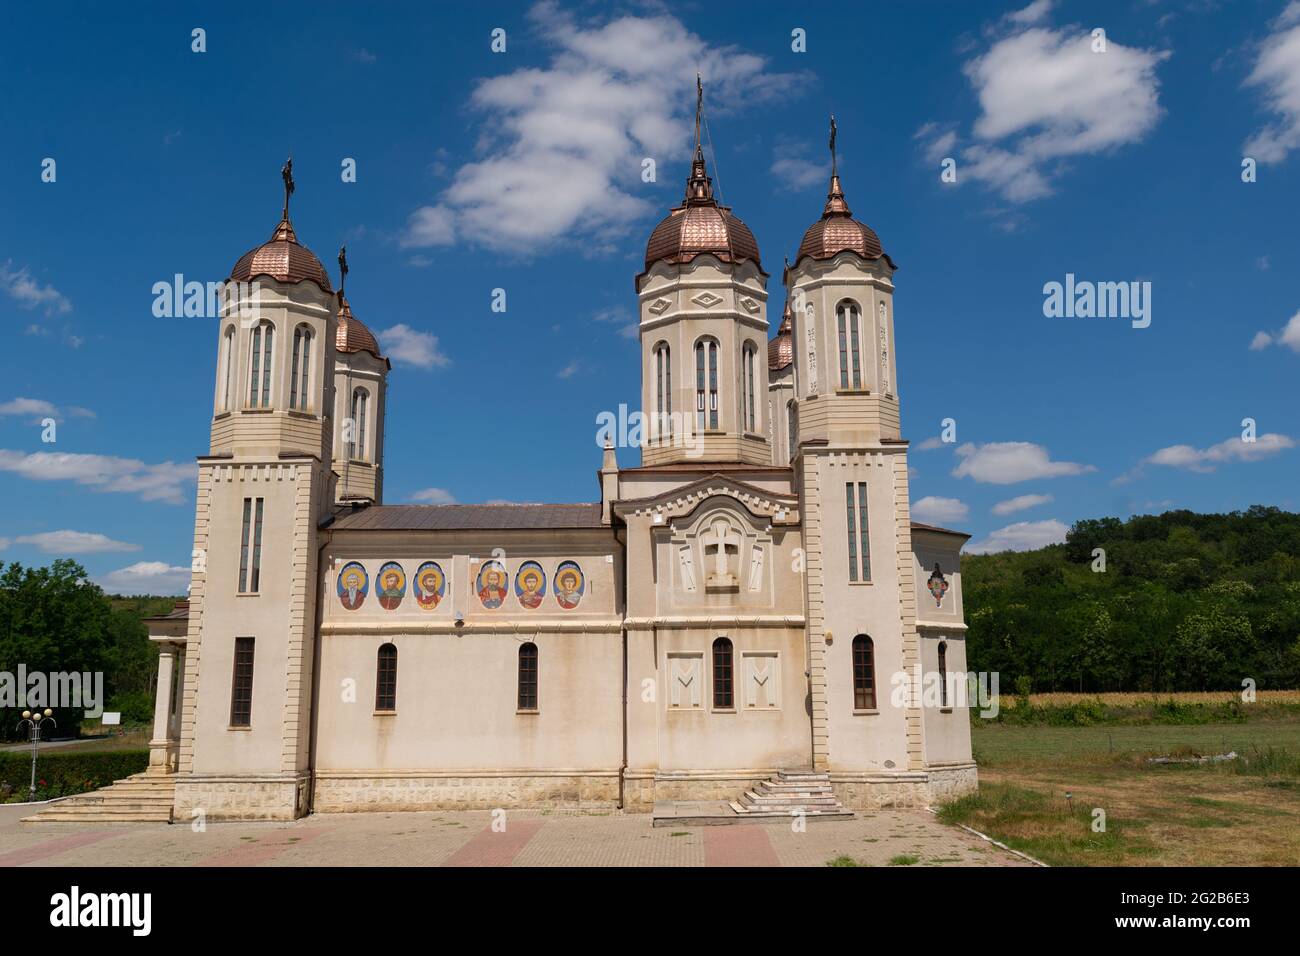 Constanta, Rumänien - 04. August 2020: Das Kloster der Höhle des Heiligen Andreas in der Nähe von Ion Corvin, Constanta, Rumänien. Stockfoto